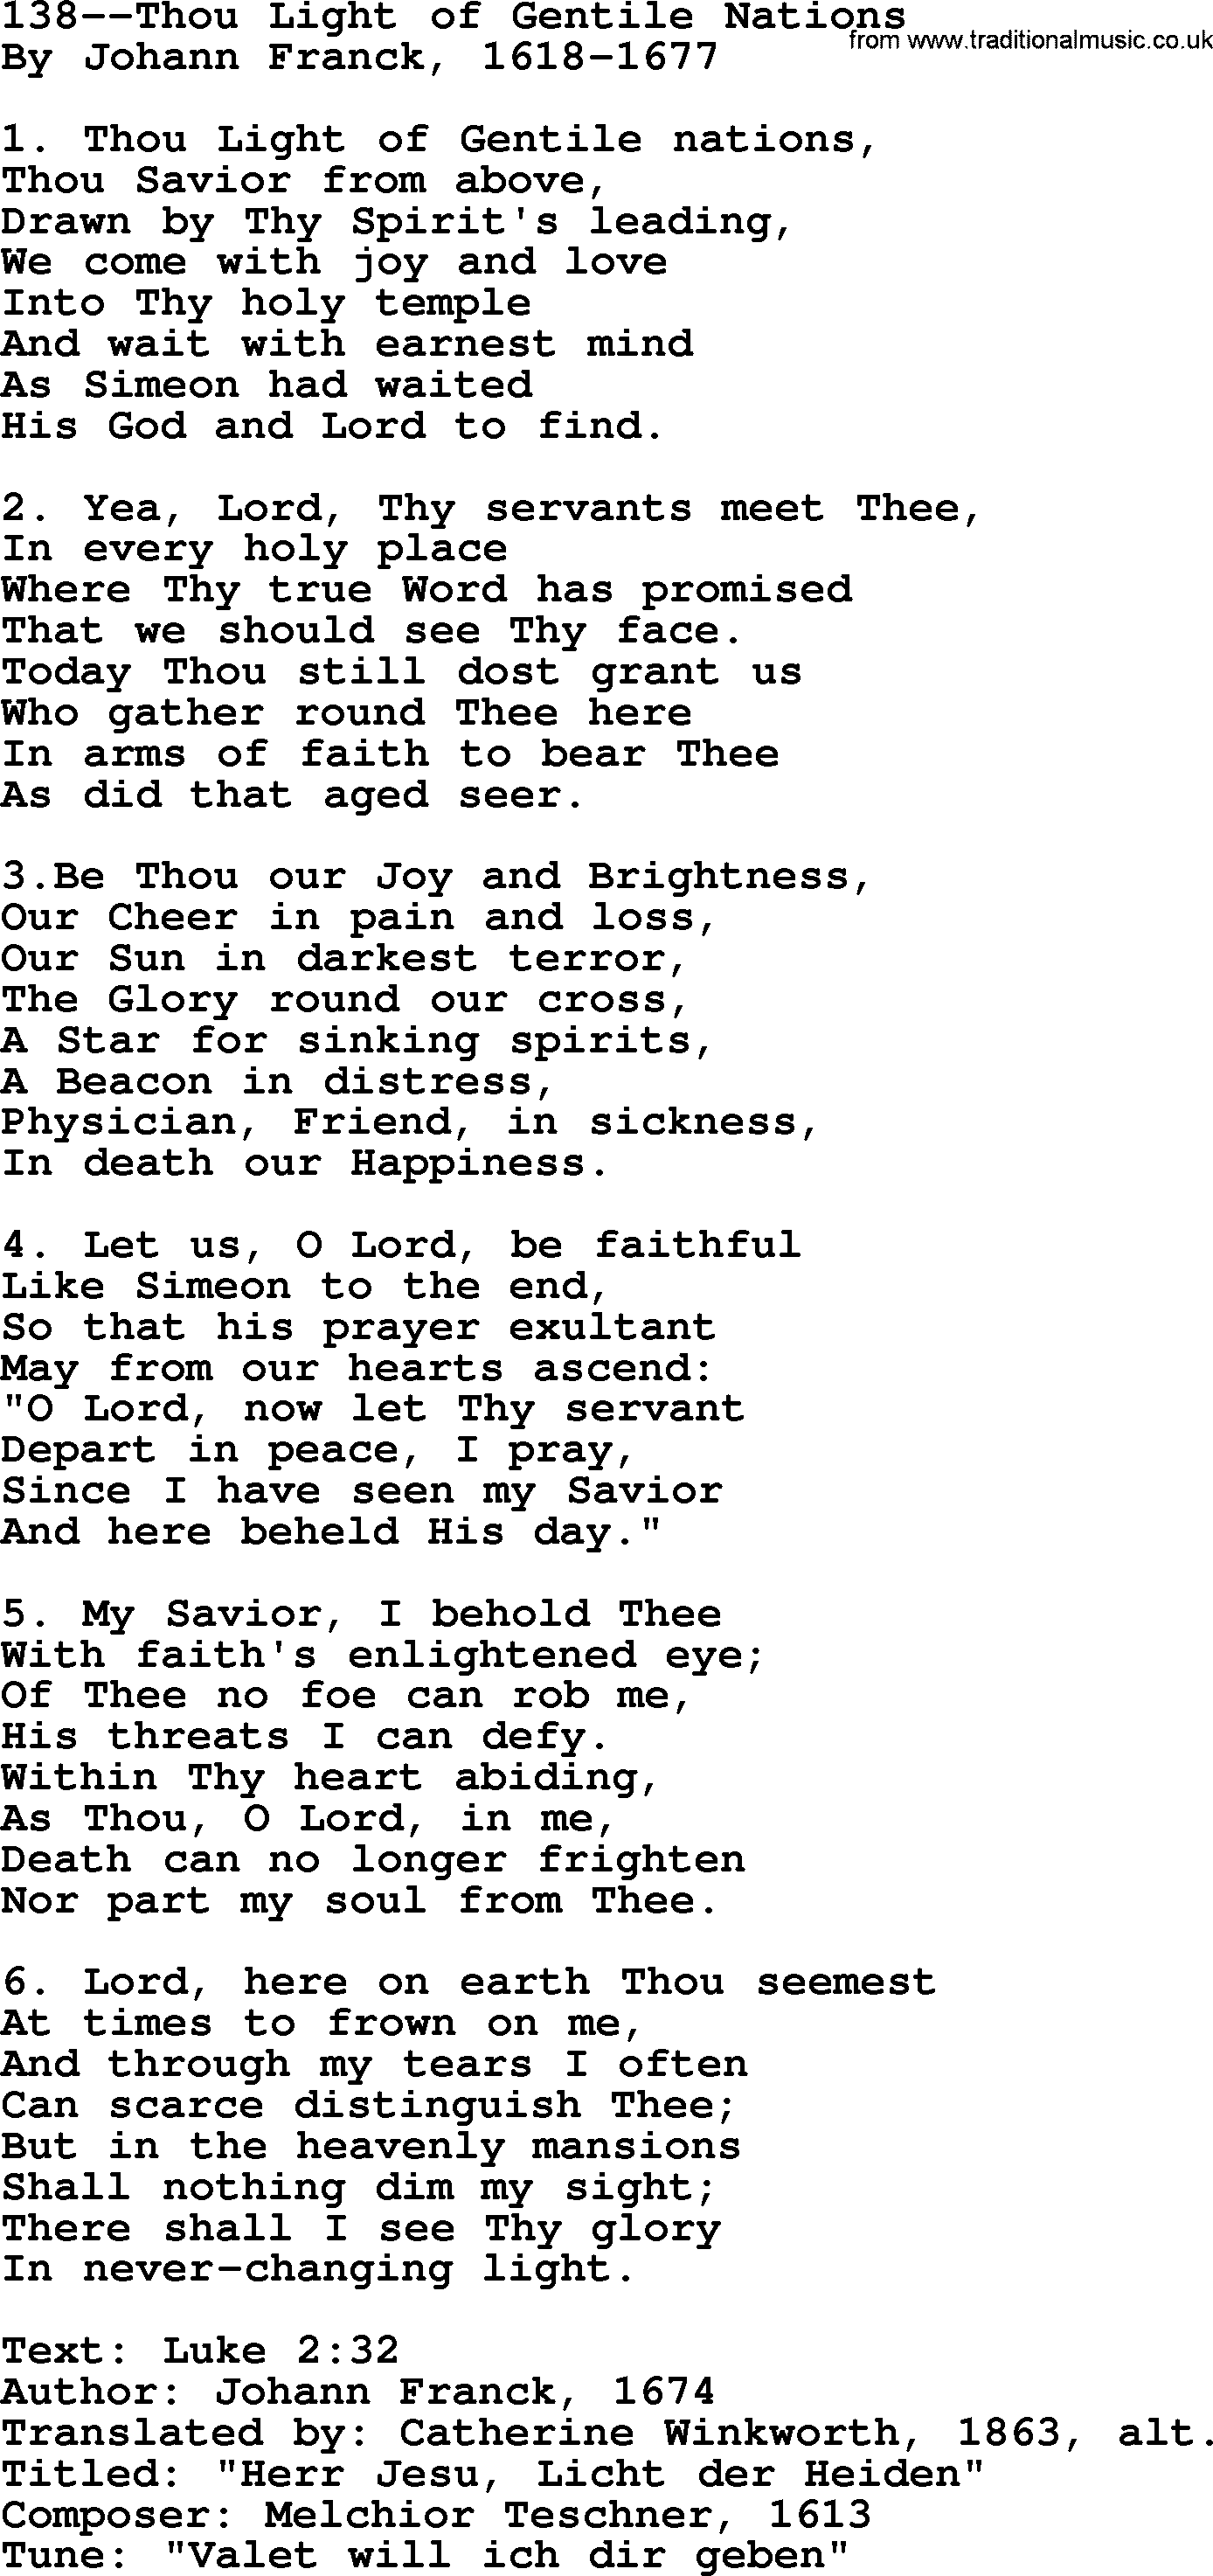 Lutheran Hymn: 138--Thou Light of Gentile Nations.txt lyrics with PDF